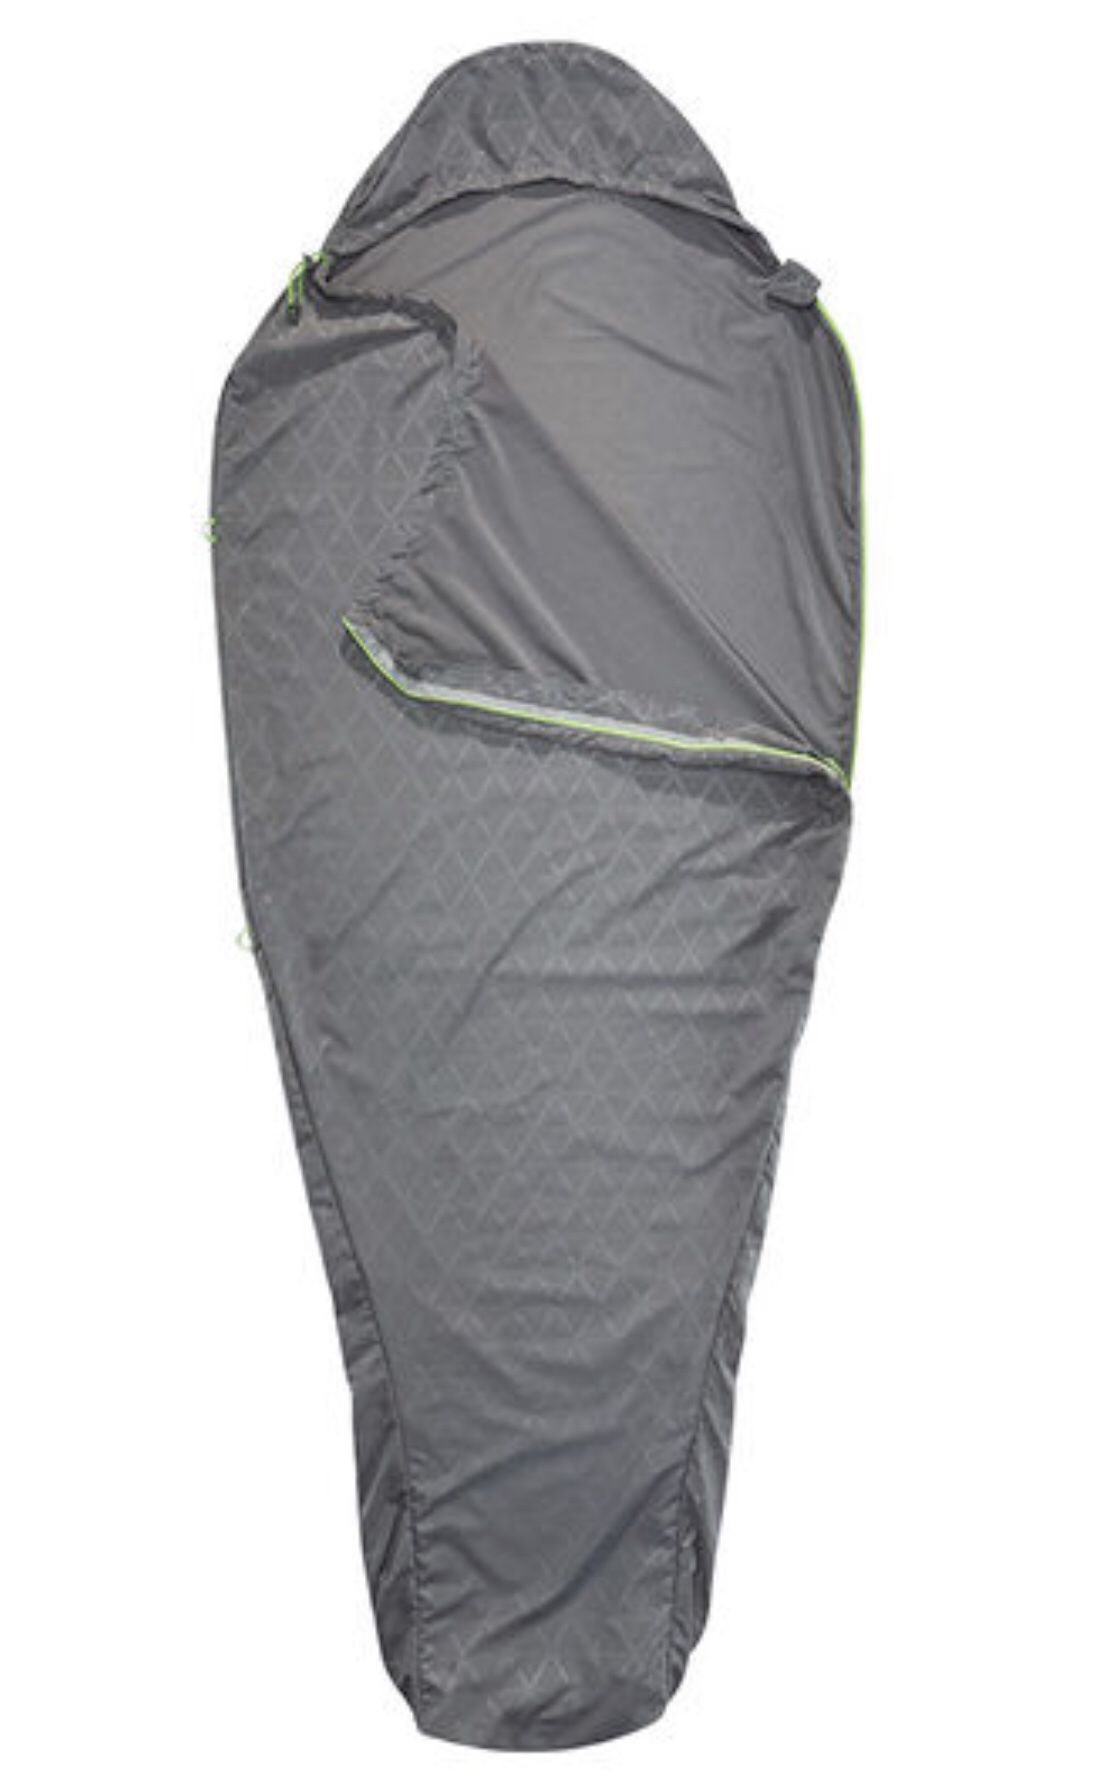 Thermarest sleeping bag liner long